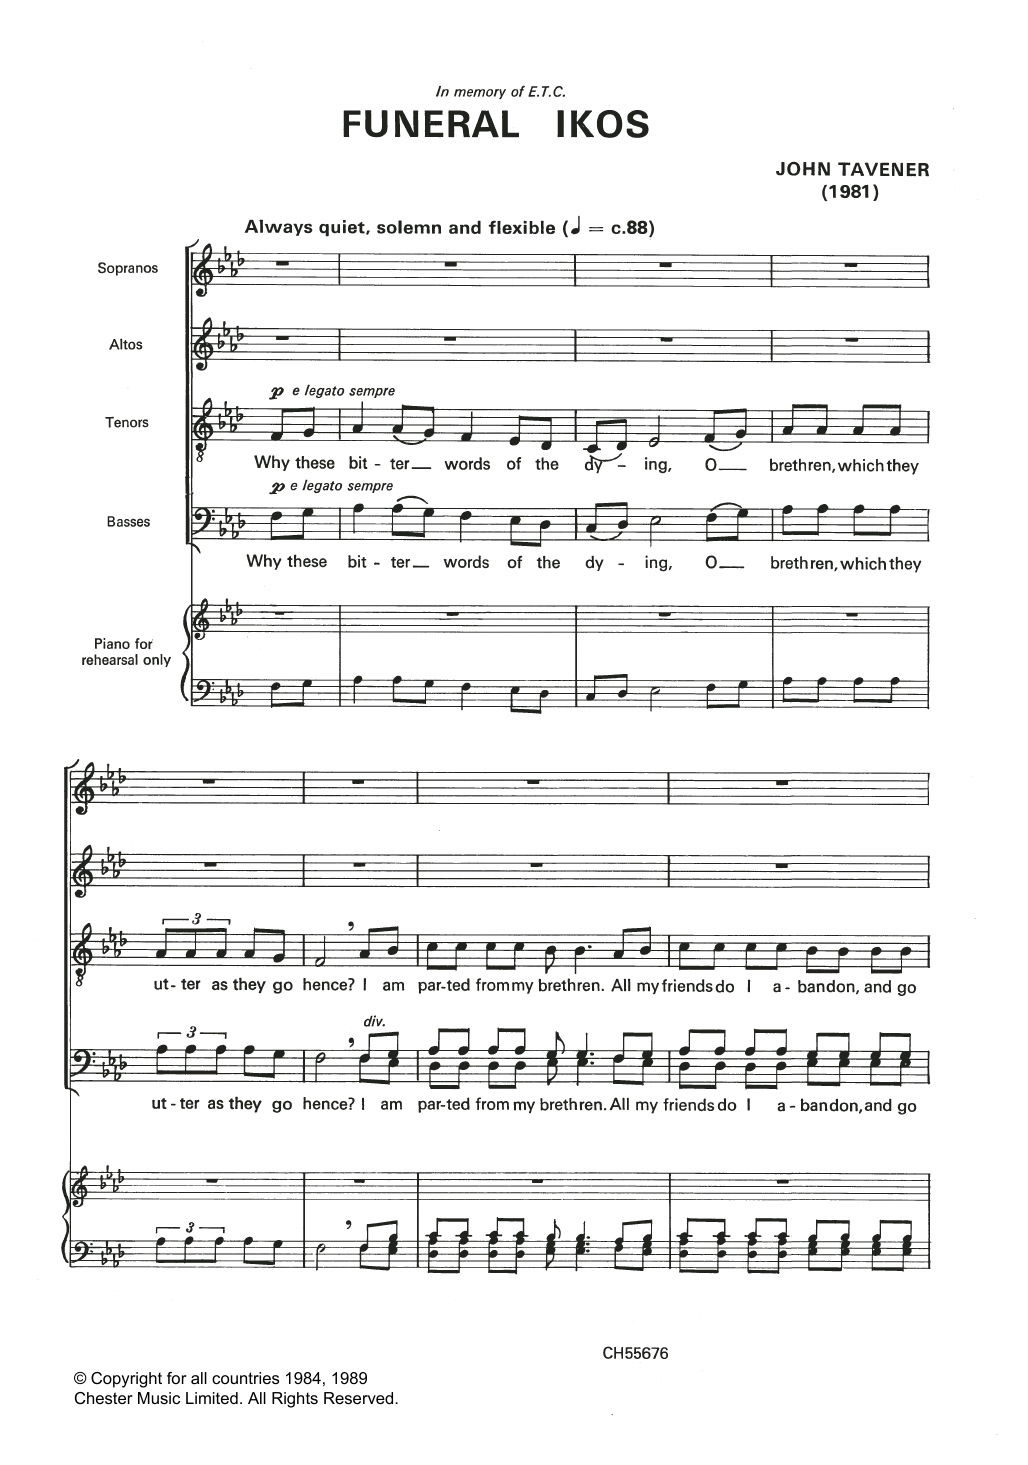 John Tavener Funeral Ikos Sheet Music Notes & Chords for Choir - Download or Print PDF